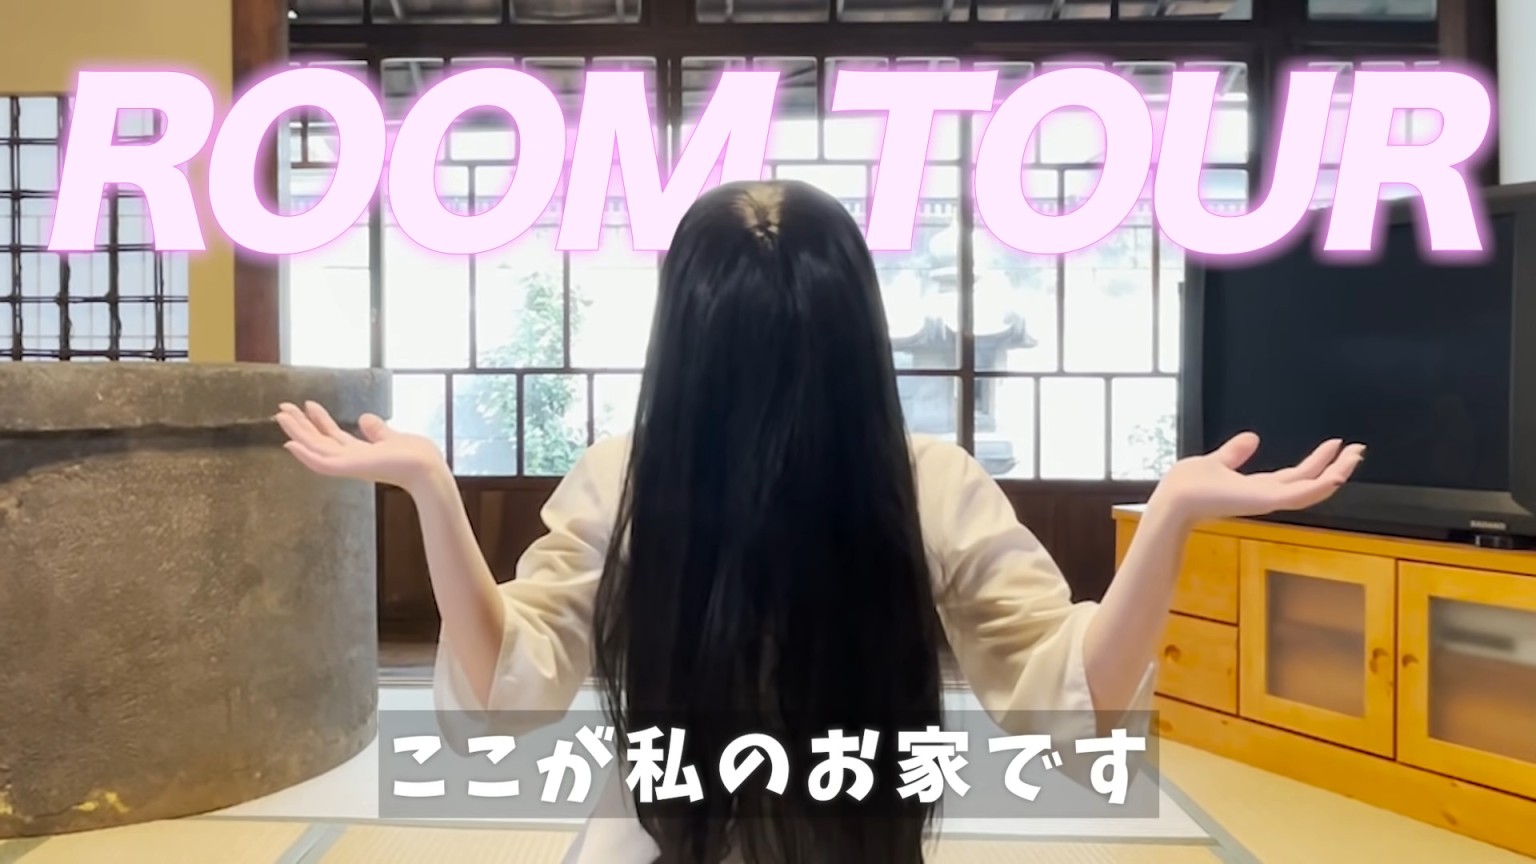 Sadako Now Has Her Own Youtube Channel Japan Today